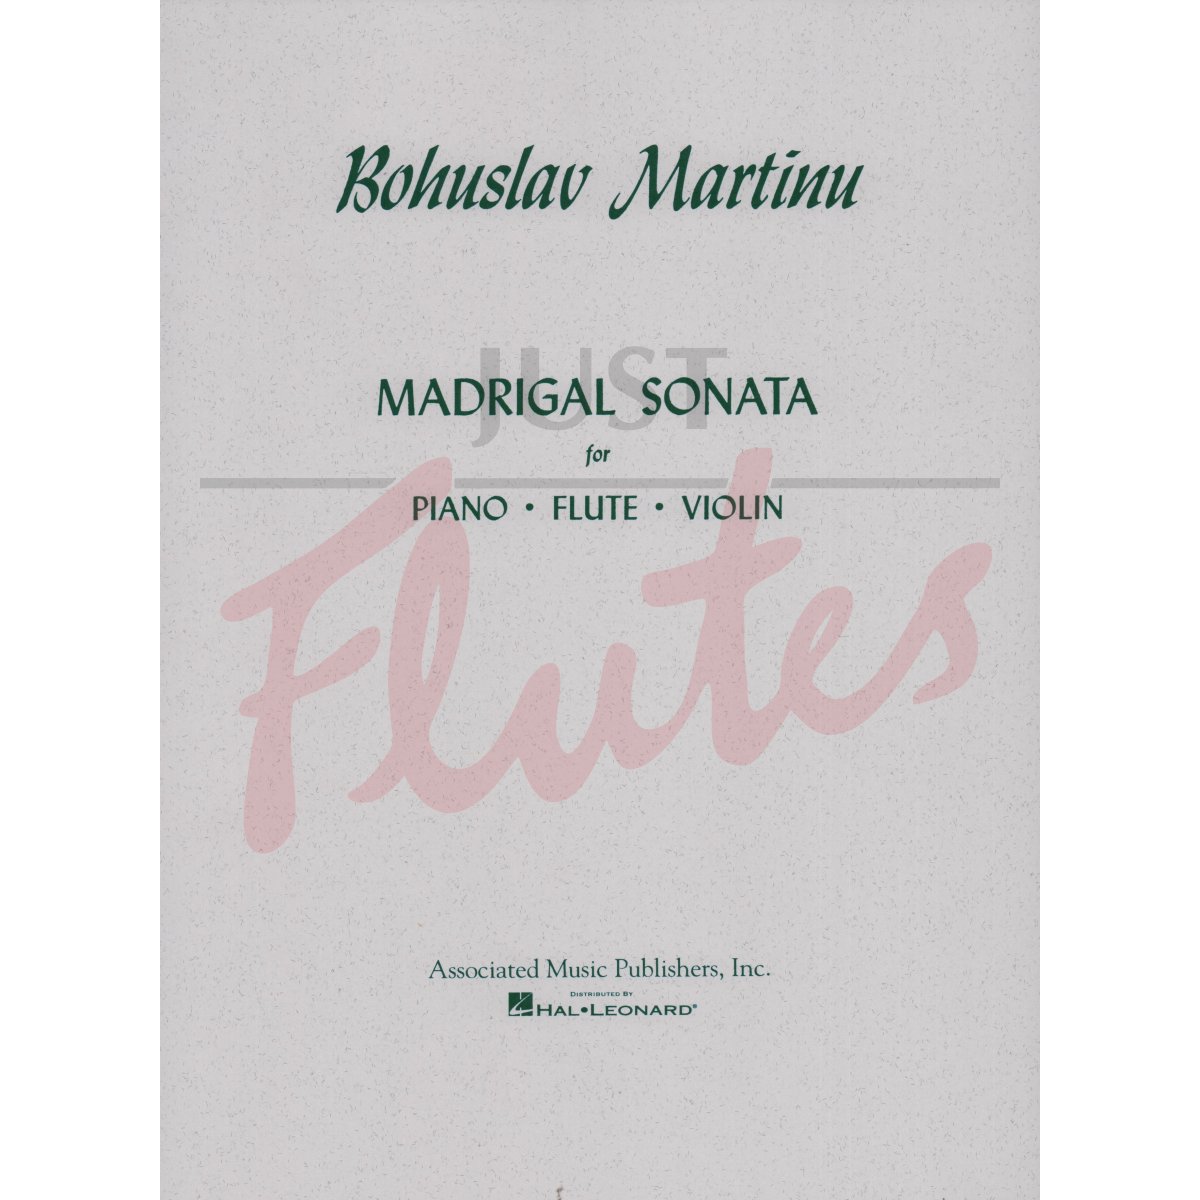 Madrigal Sonata for Piano, Flute and Violin